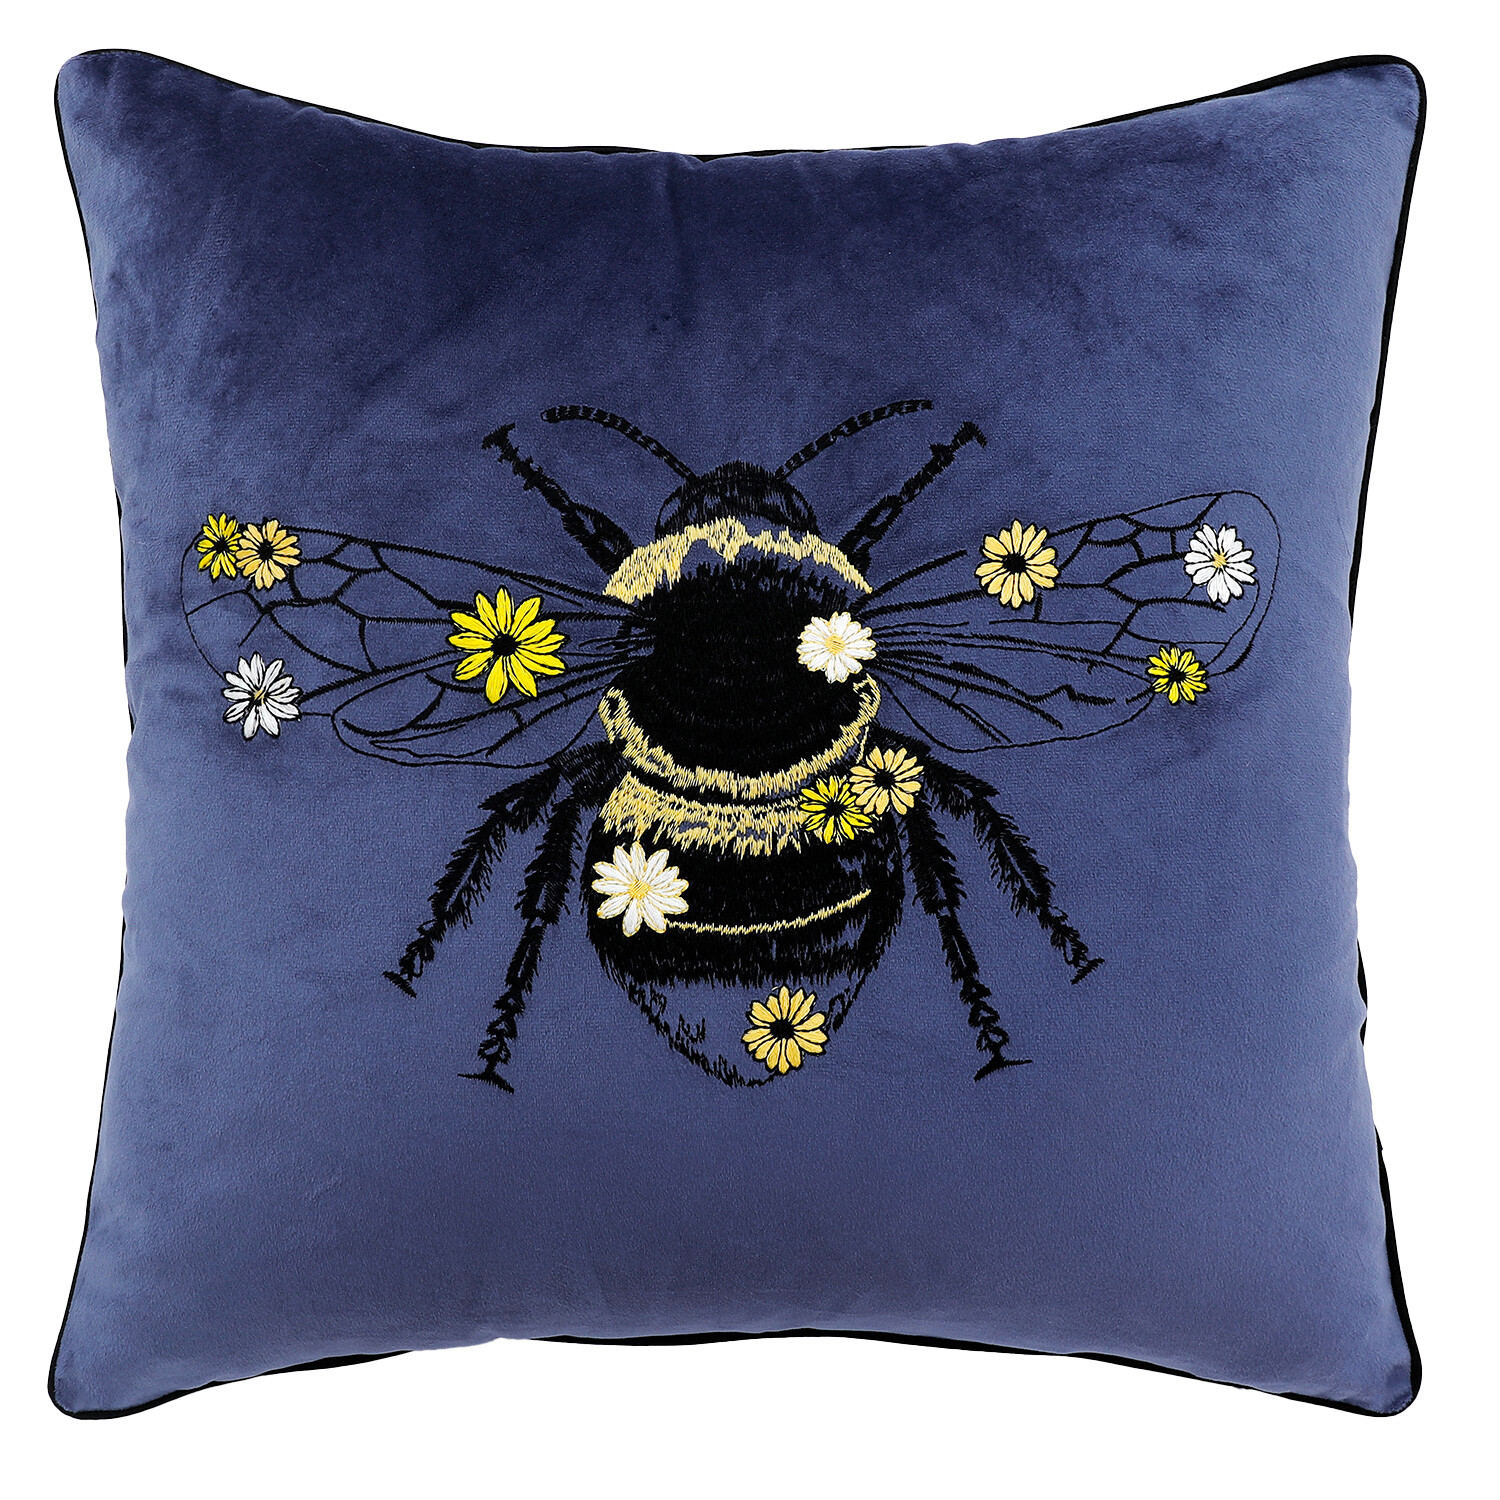 Bumblebee Cushion - Navy Image 1